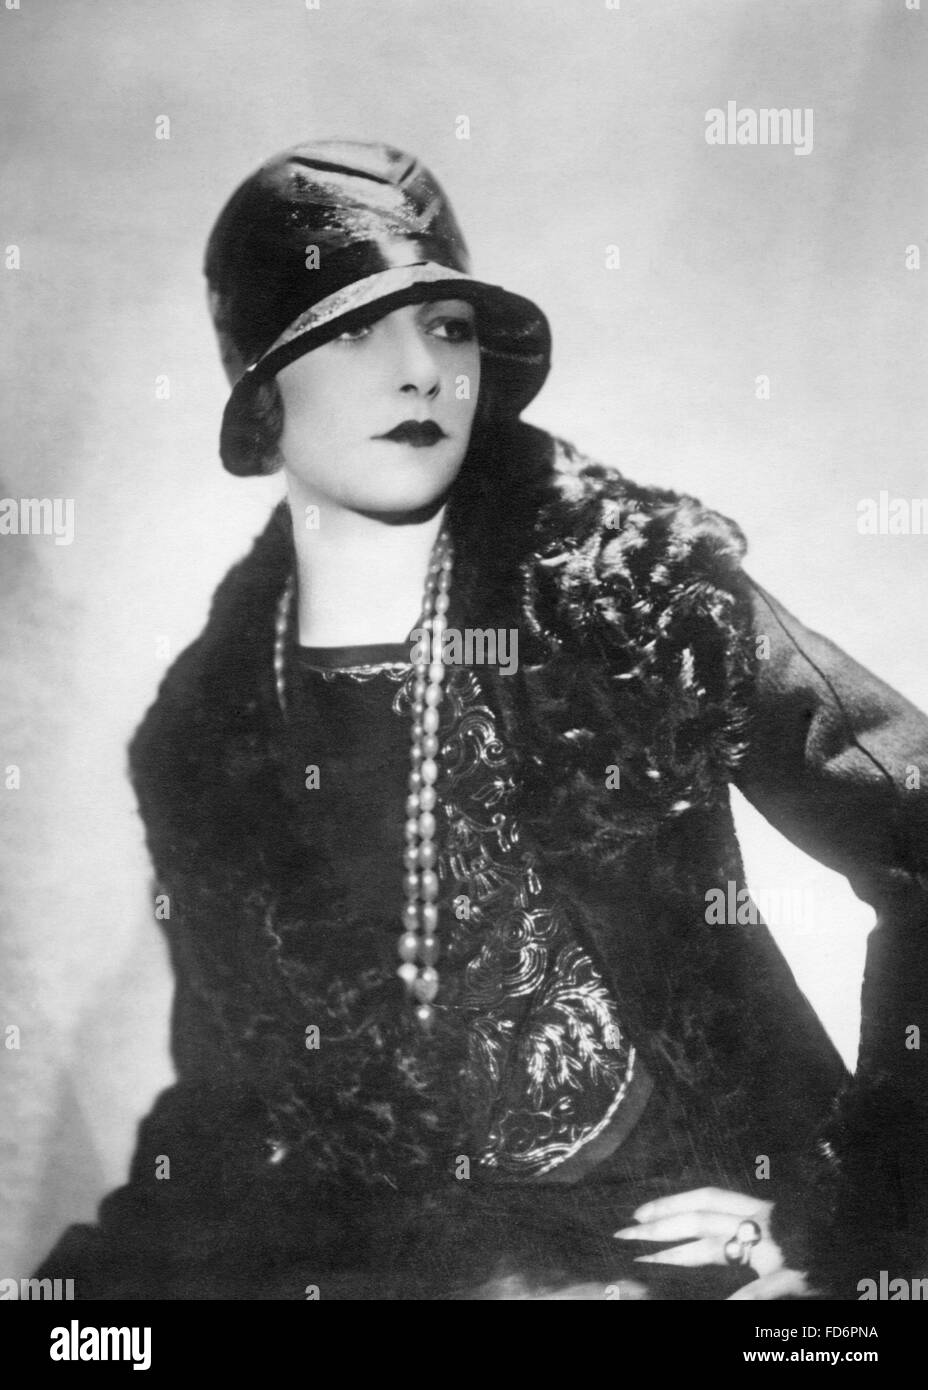 1930s fashion women Black and White Stock Photos & Images - Alamy